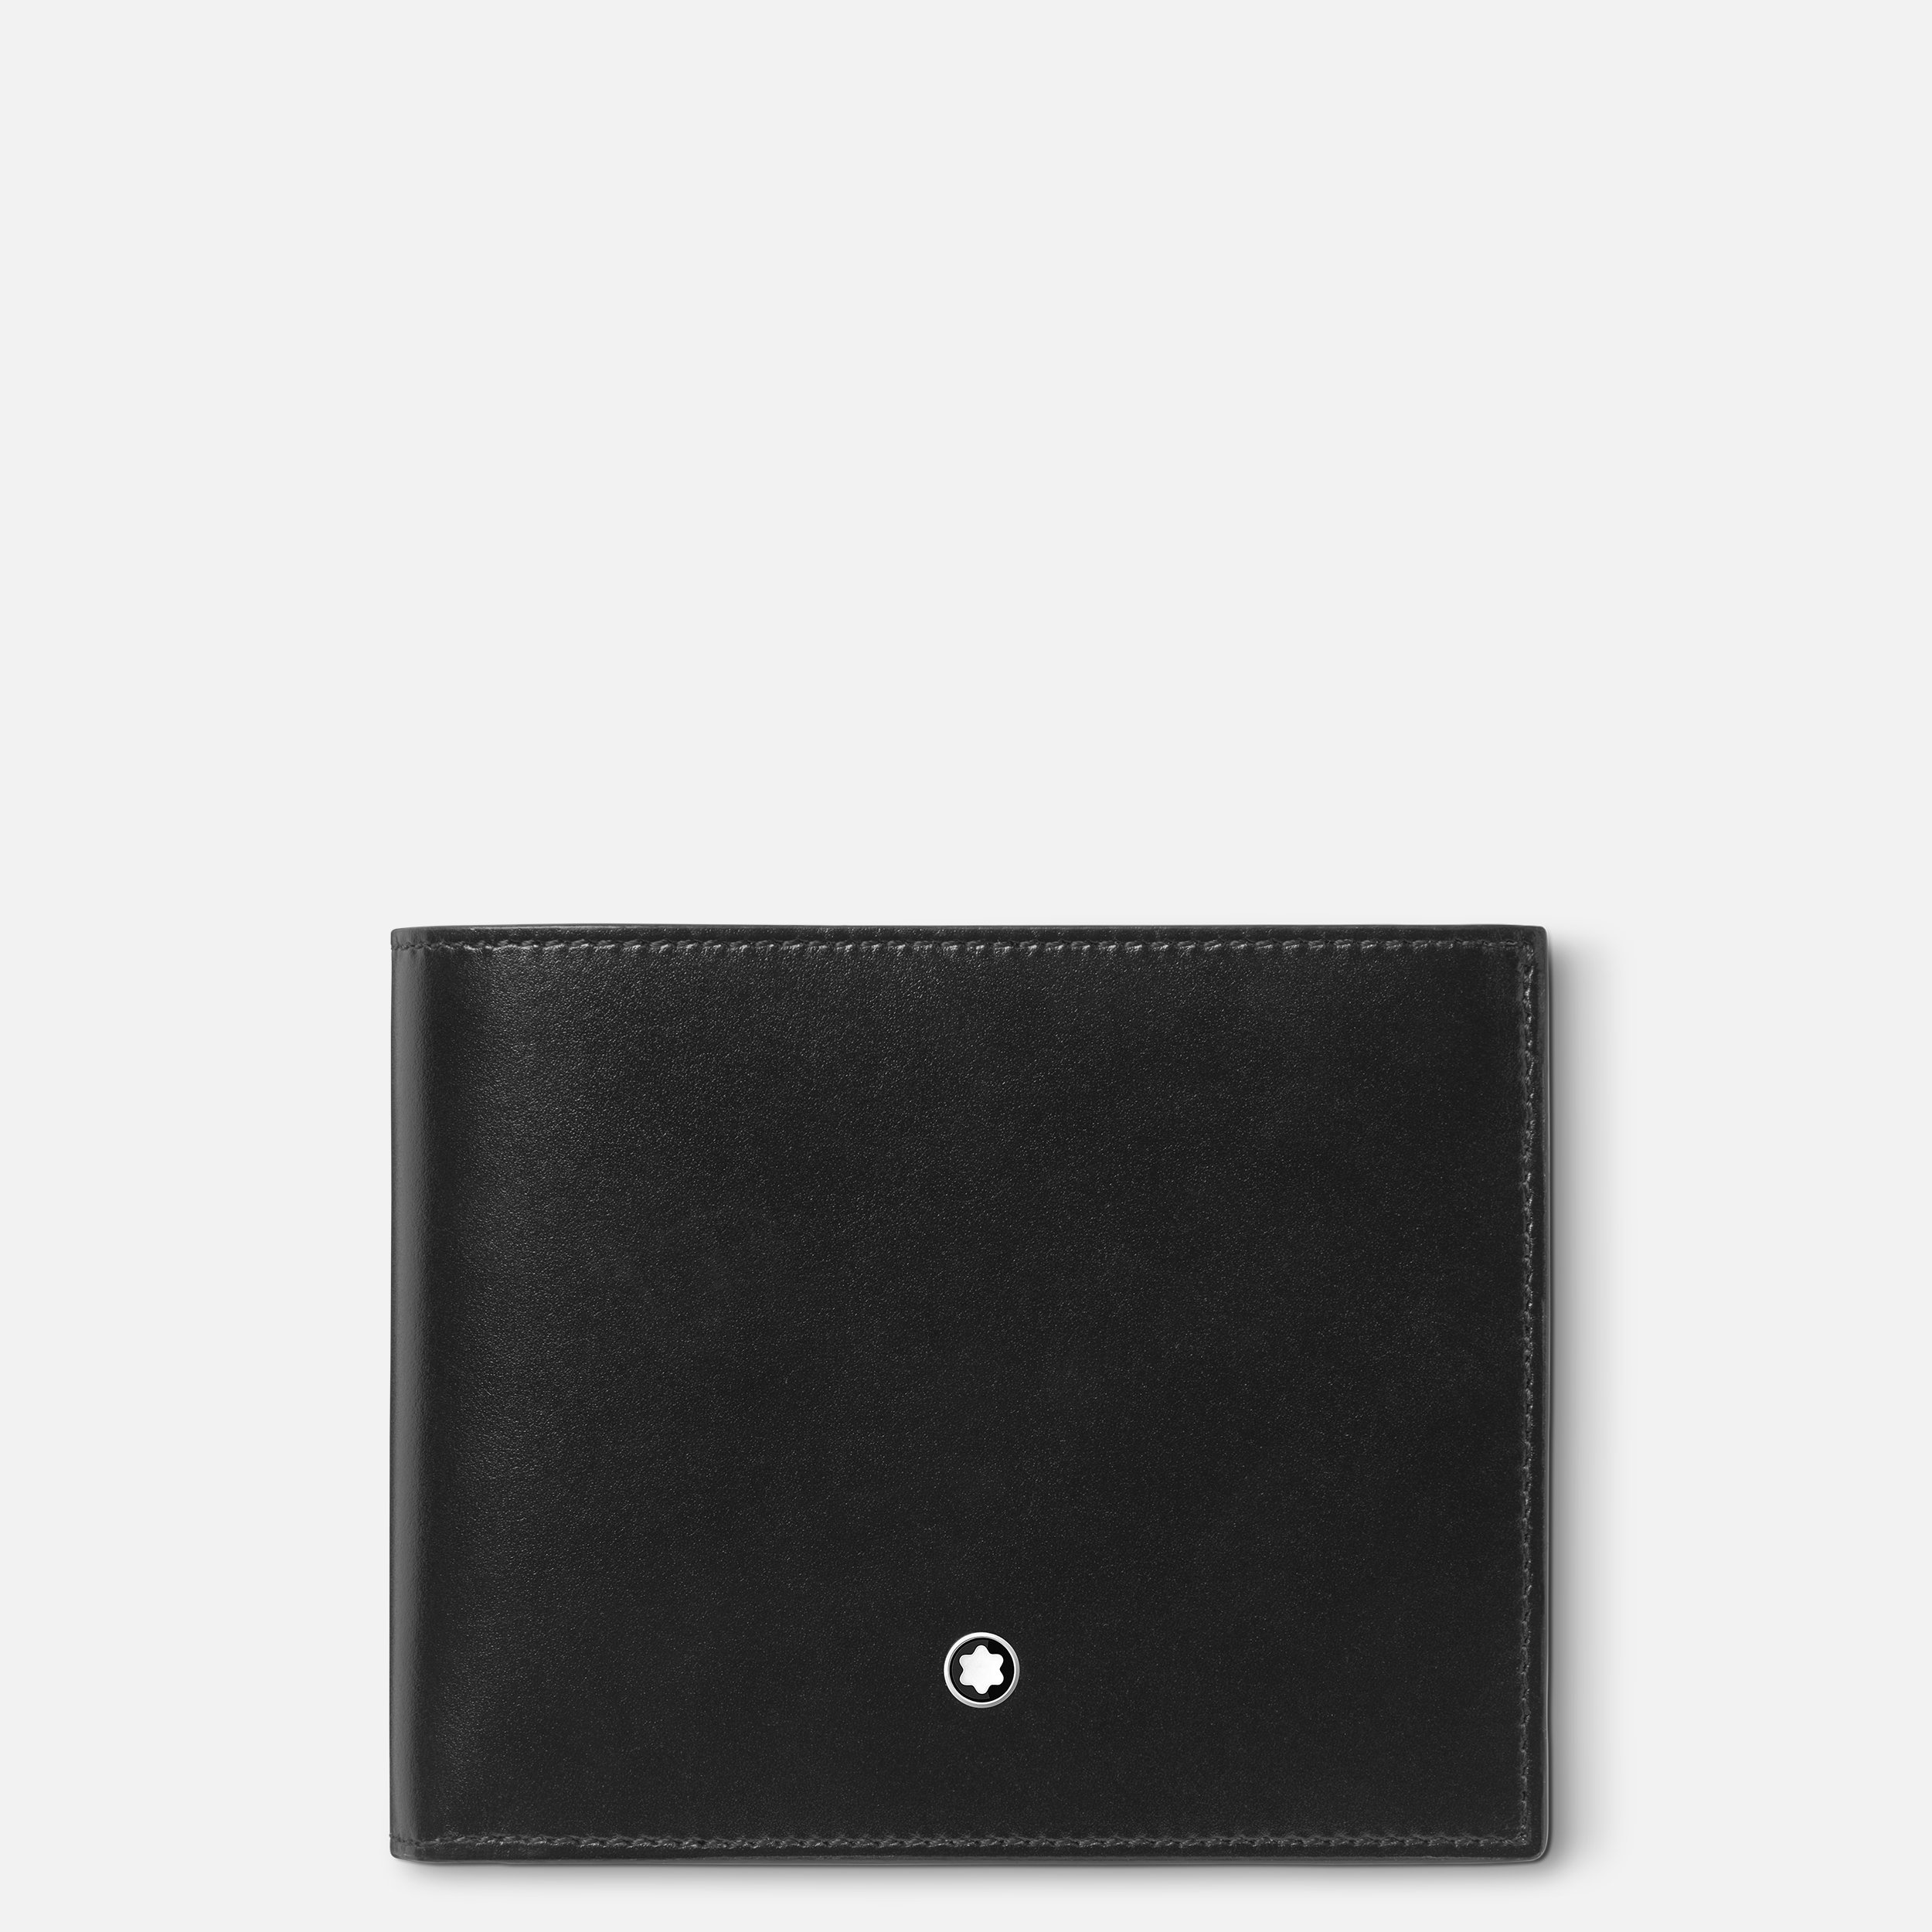 Meisterstück wallet 10cc with coin case - 1